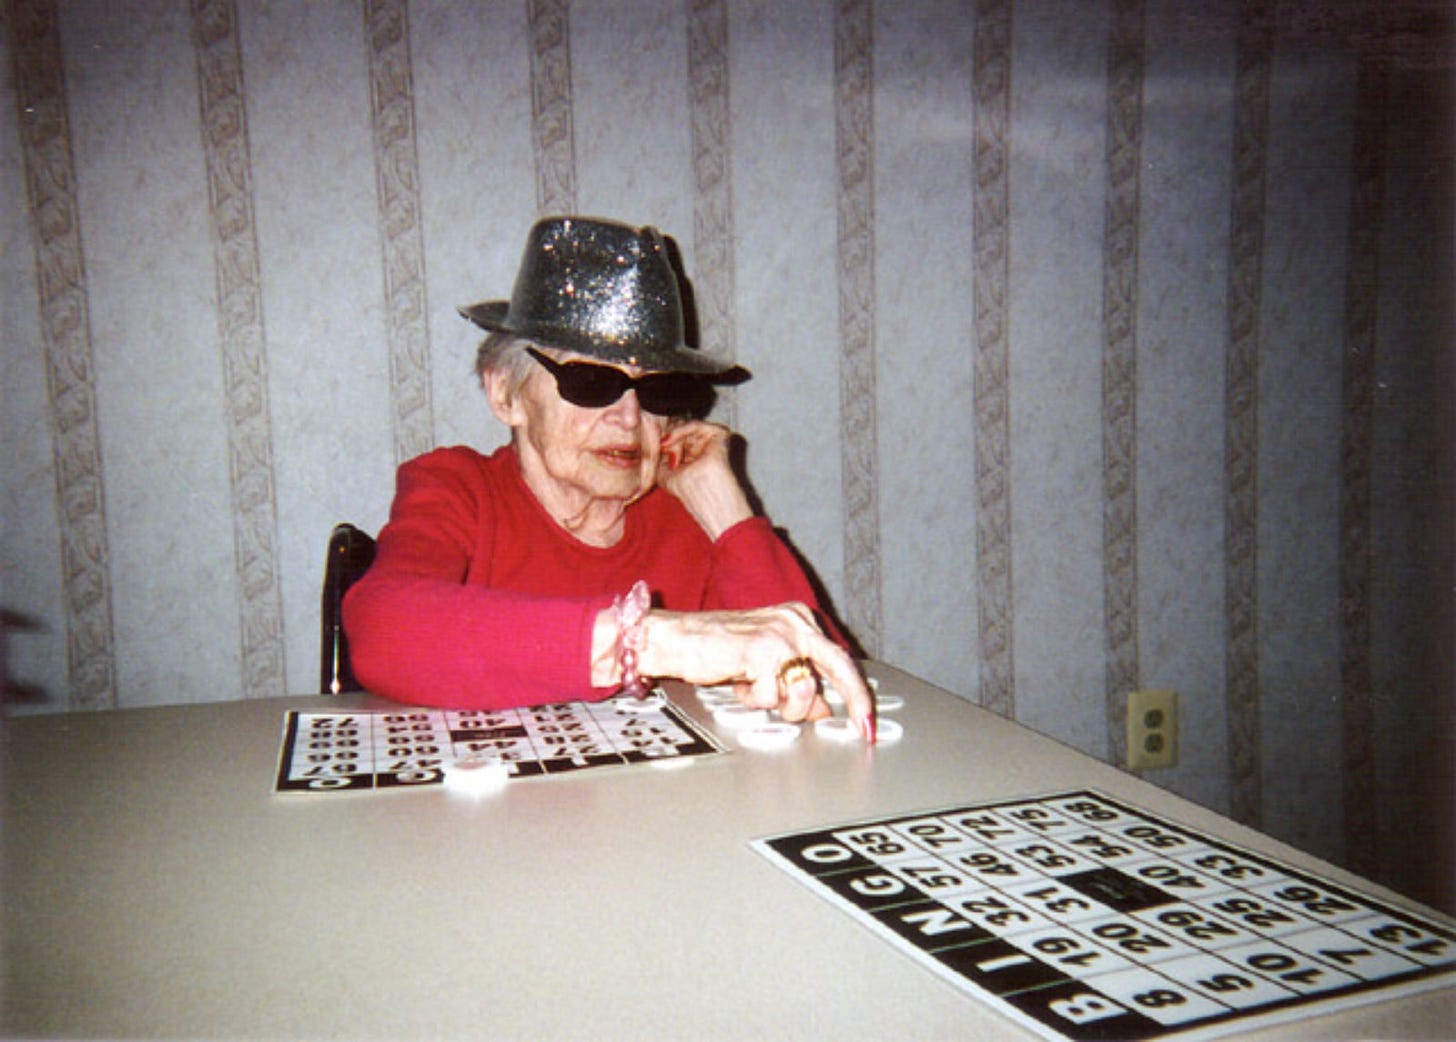 Nana playing bingo at the home.